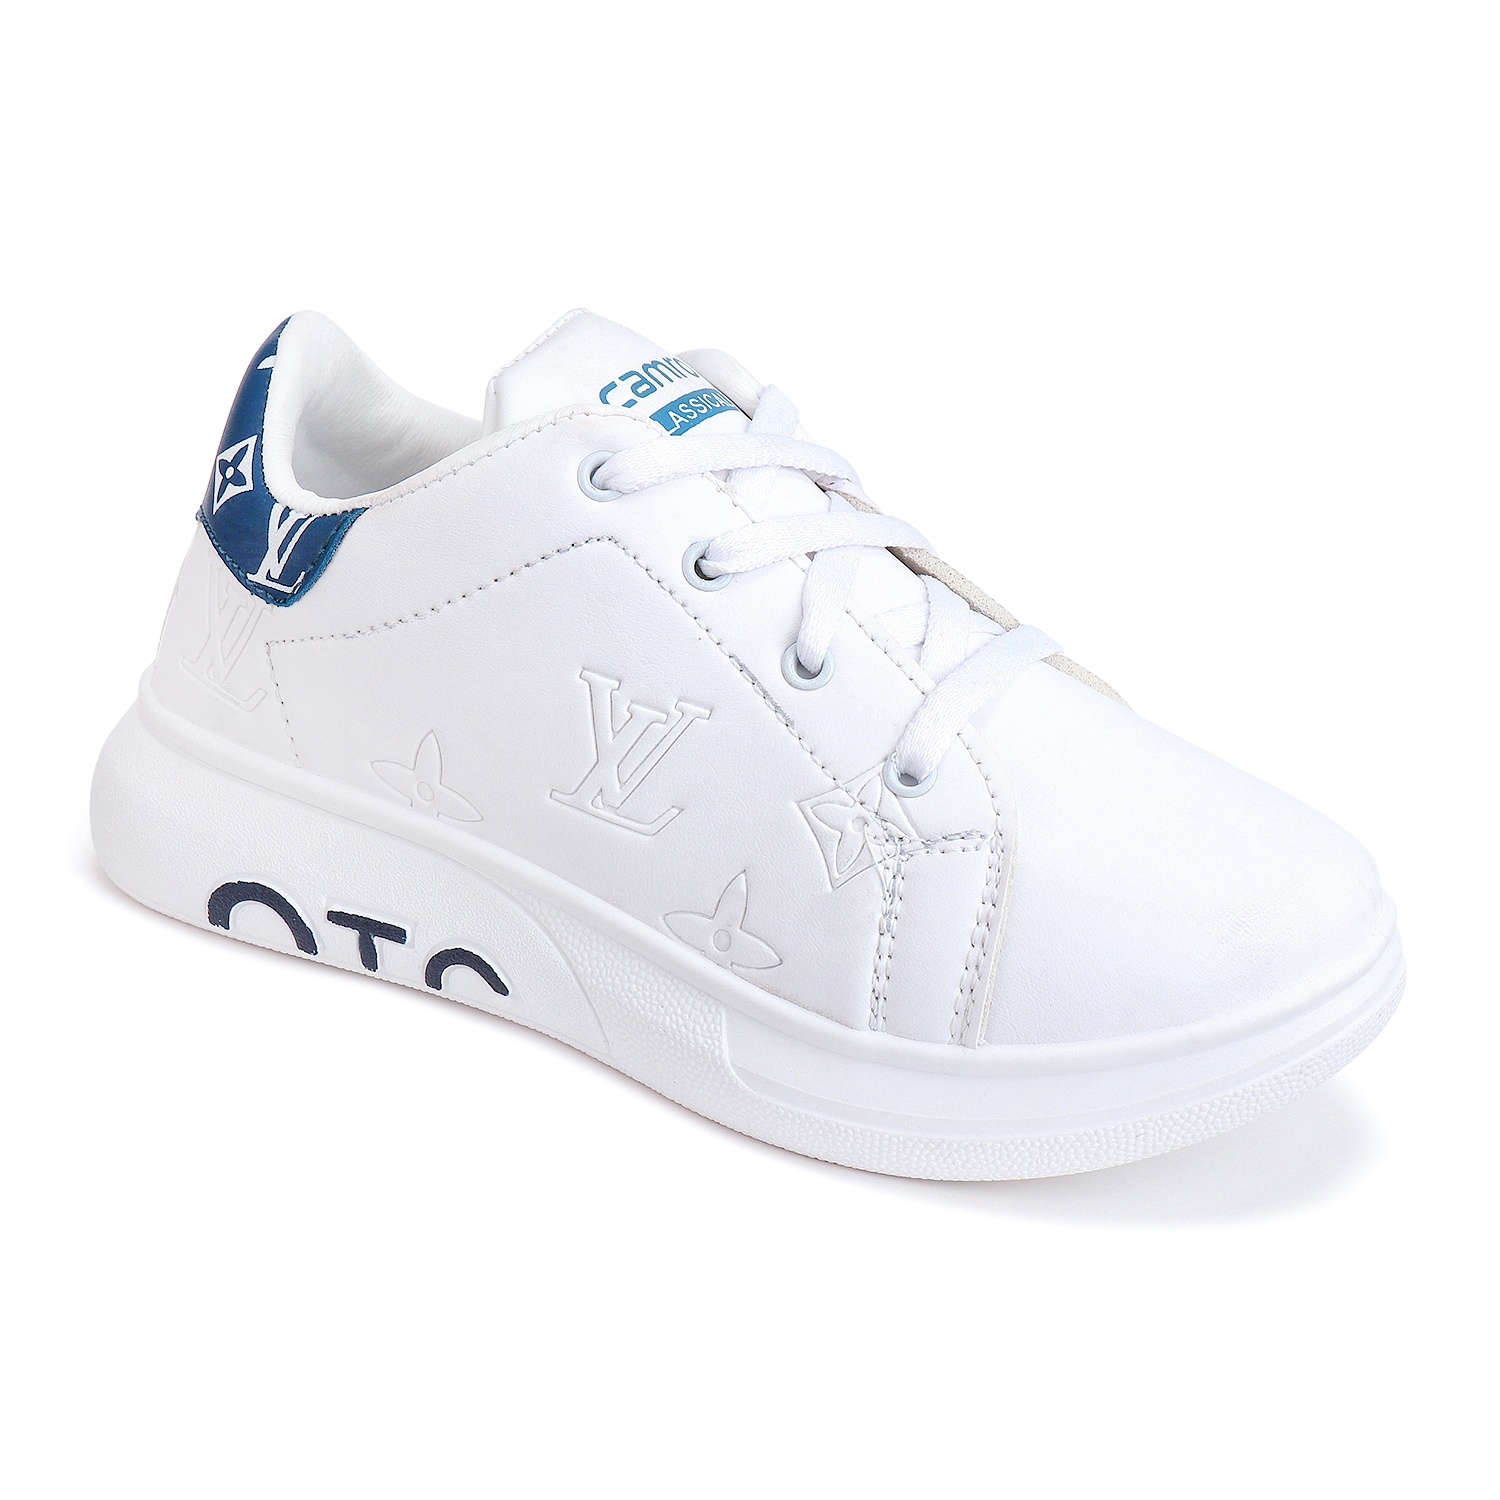 Camro OTC 2 White/T.Blue Boys Running Shoe